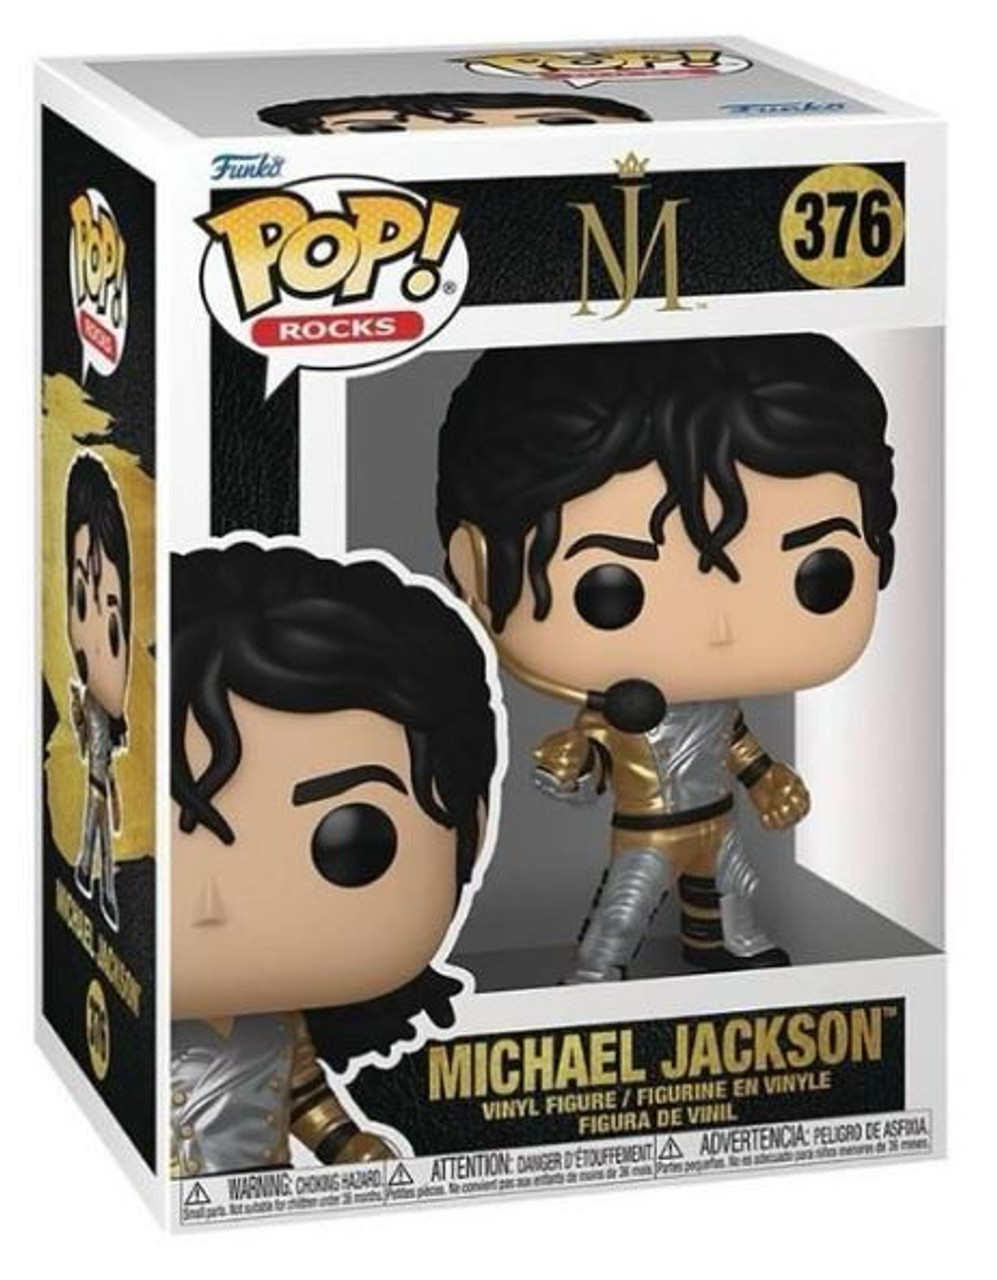 Figurine Michael Jackson Smooth Criminal / Michael Jackson / Funko Pop  Rocks 345